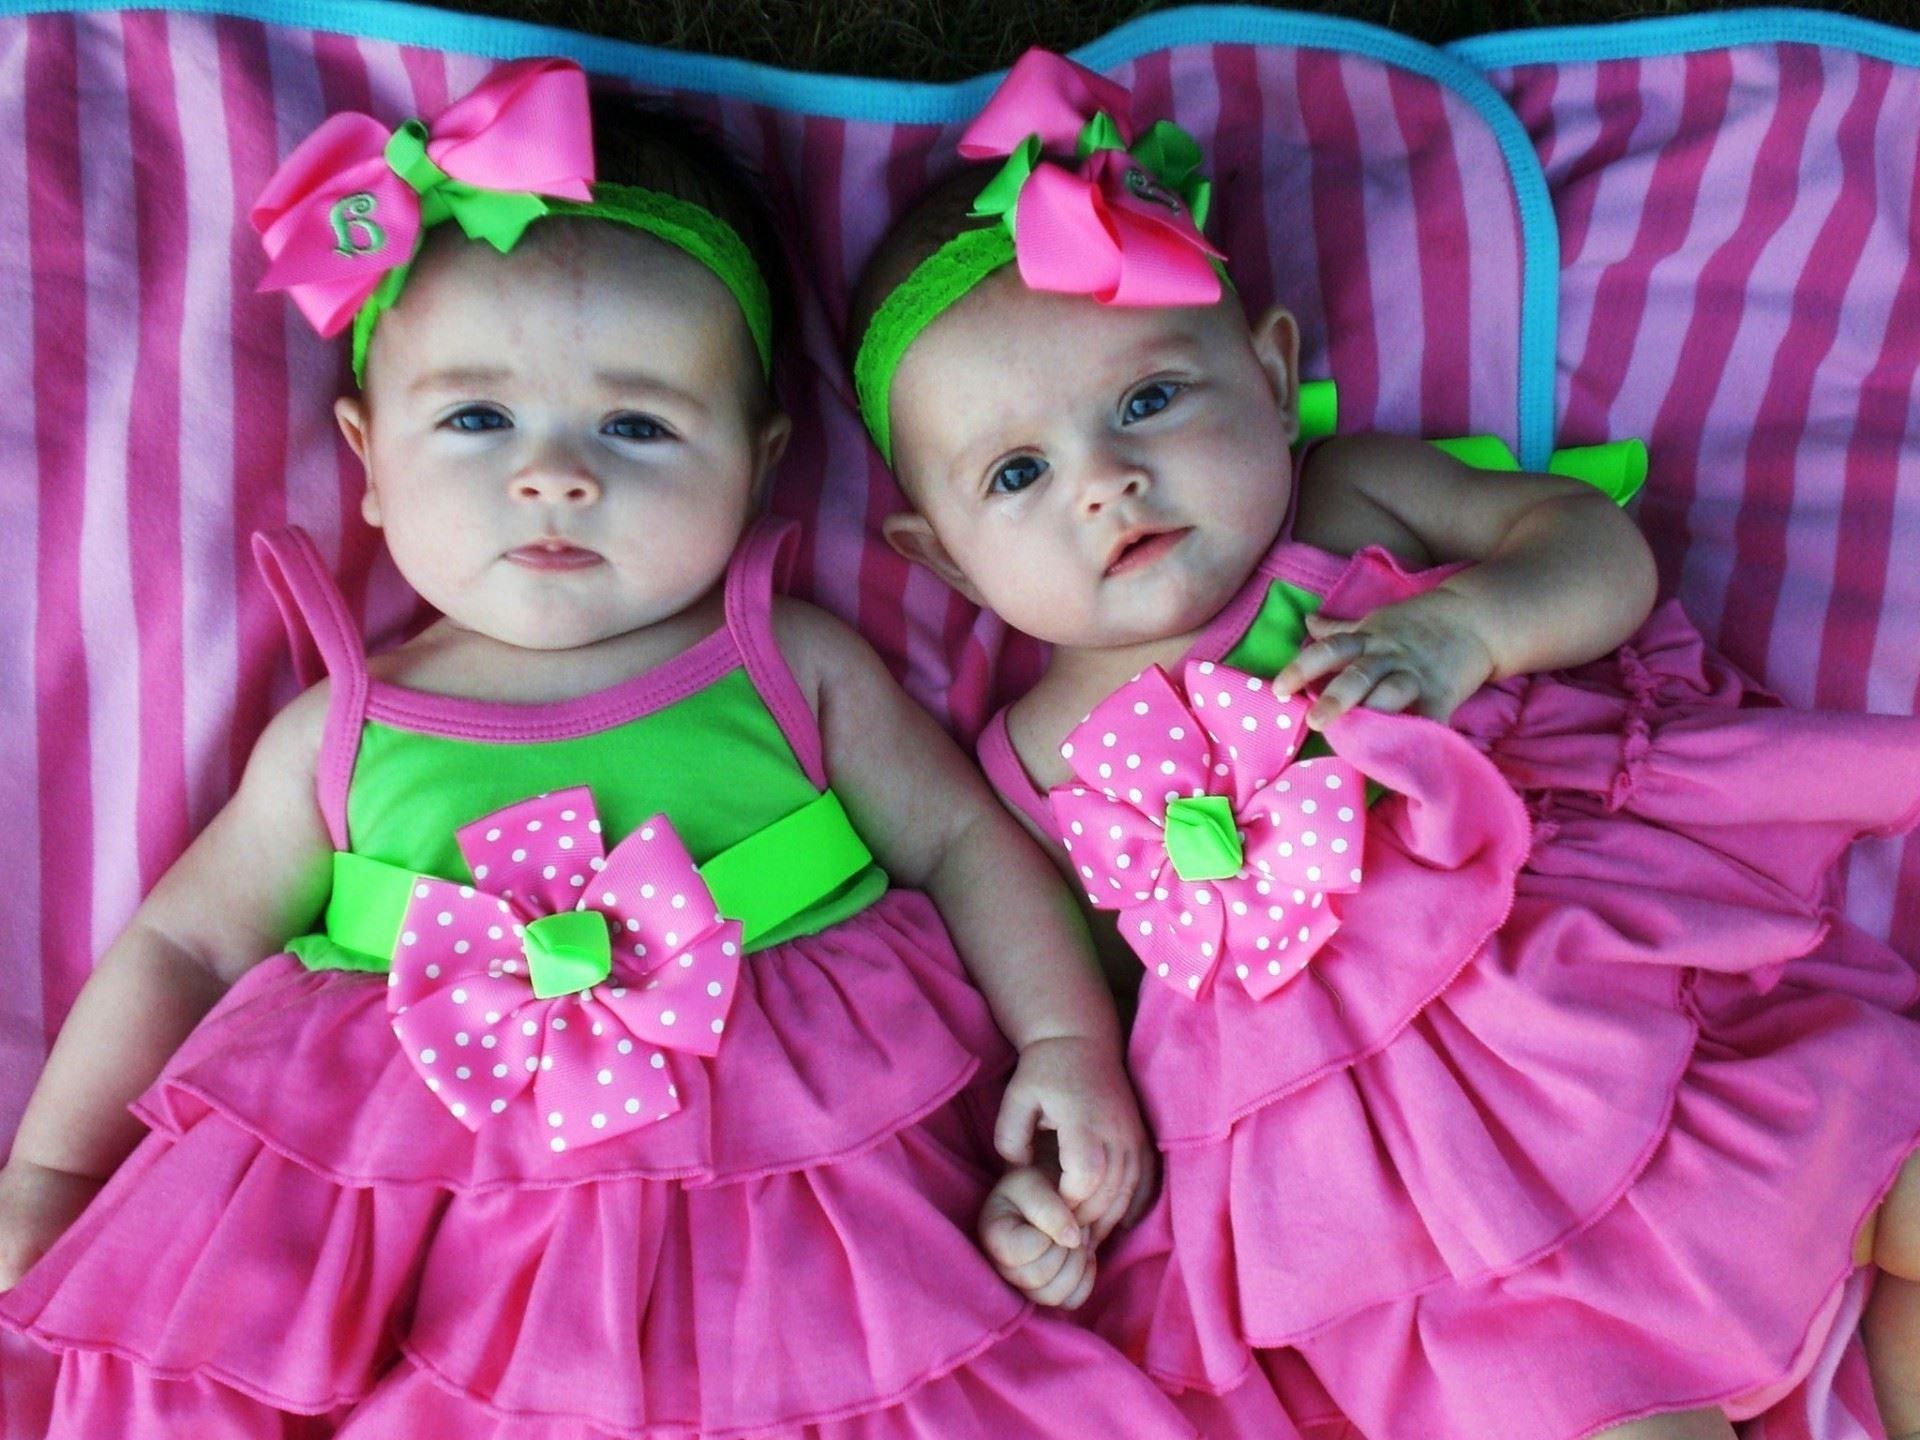 cute twins babies wallpaper image HD Wallpaper Buzz 1284×722